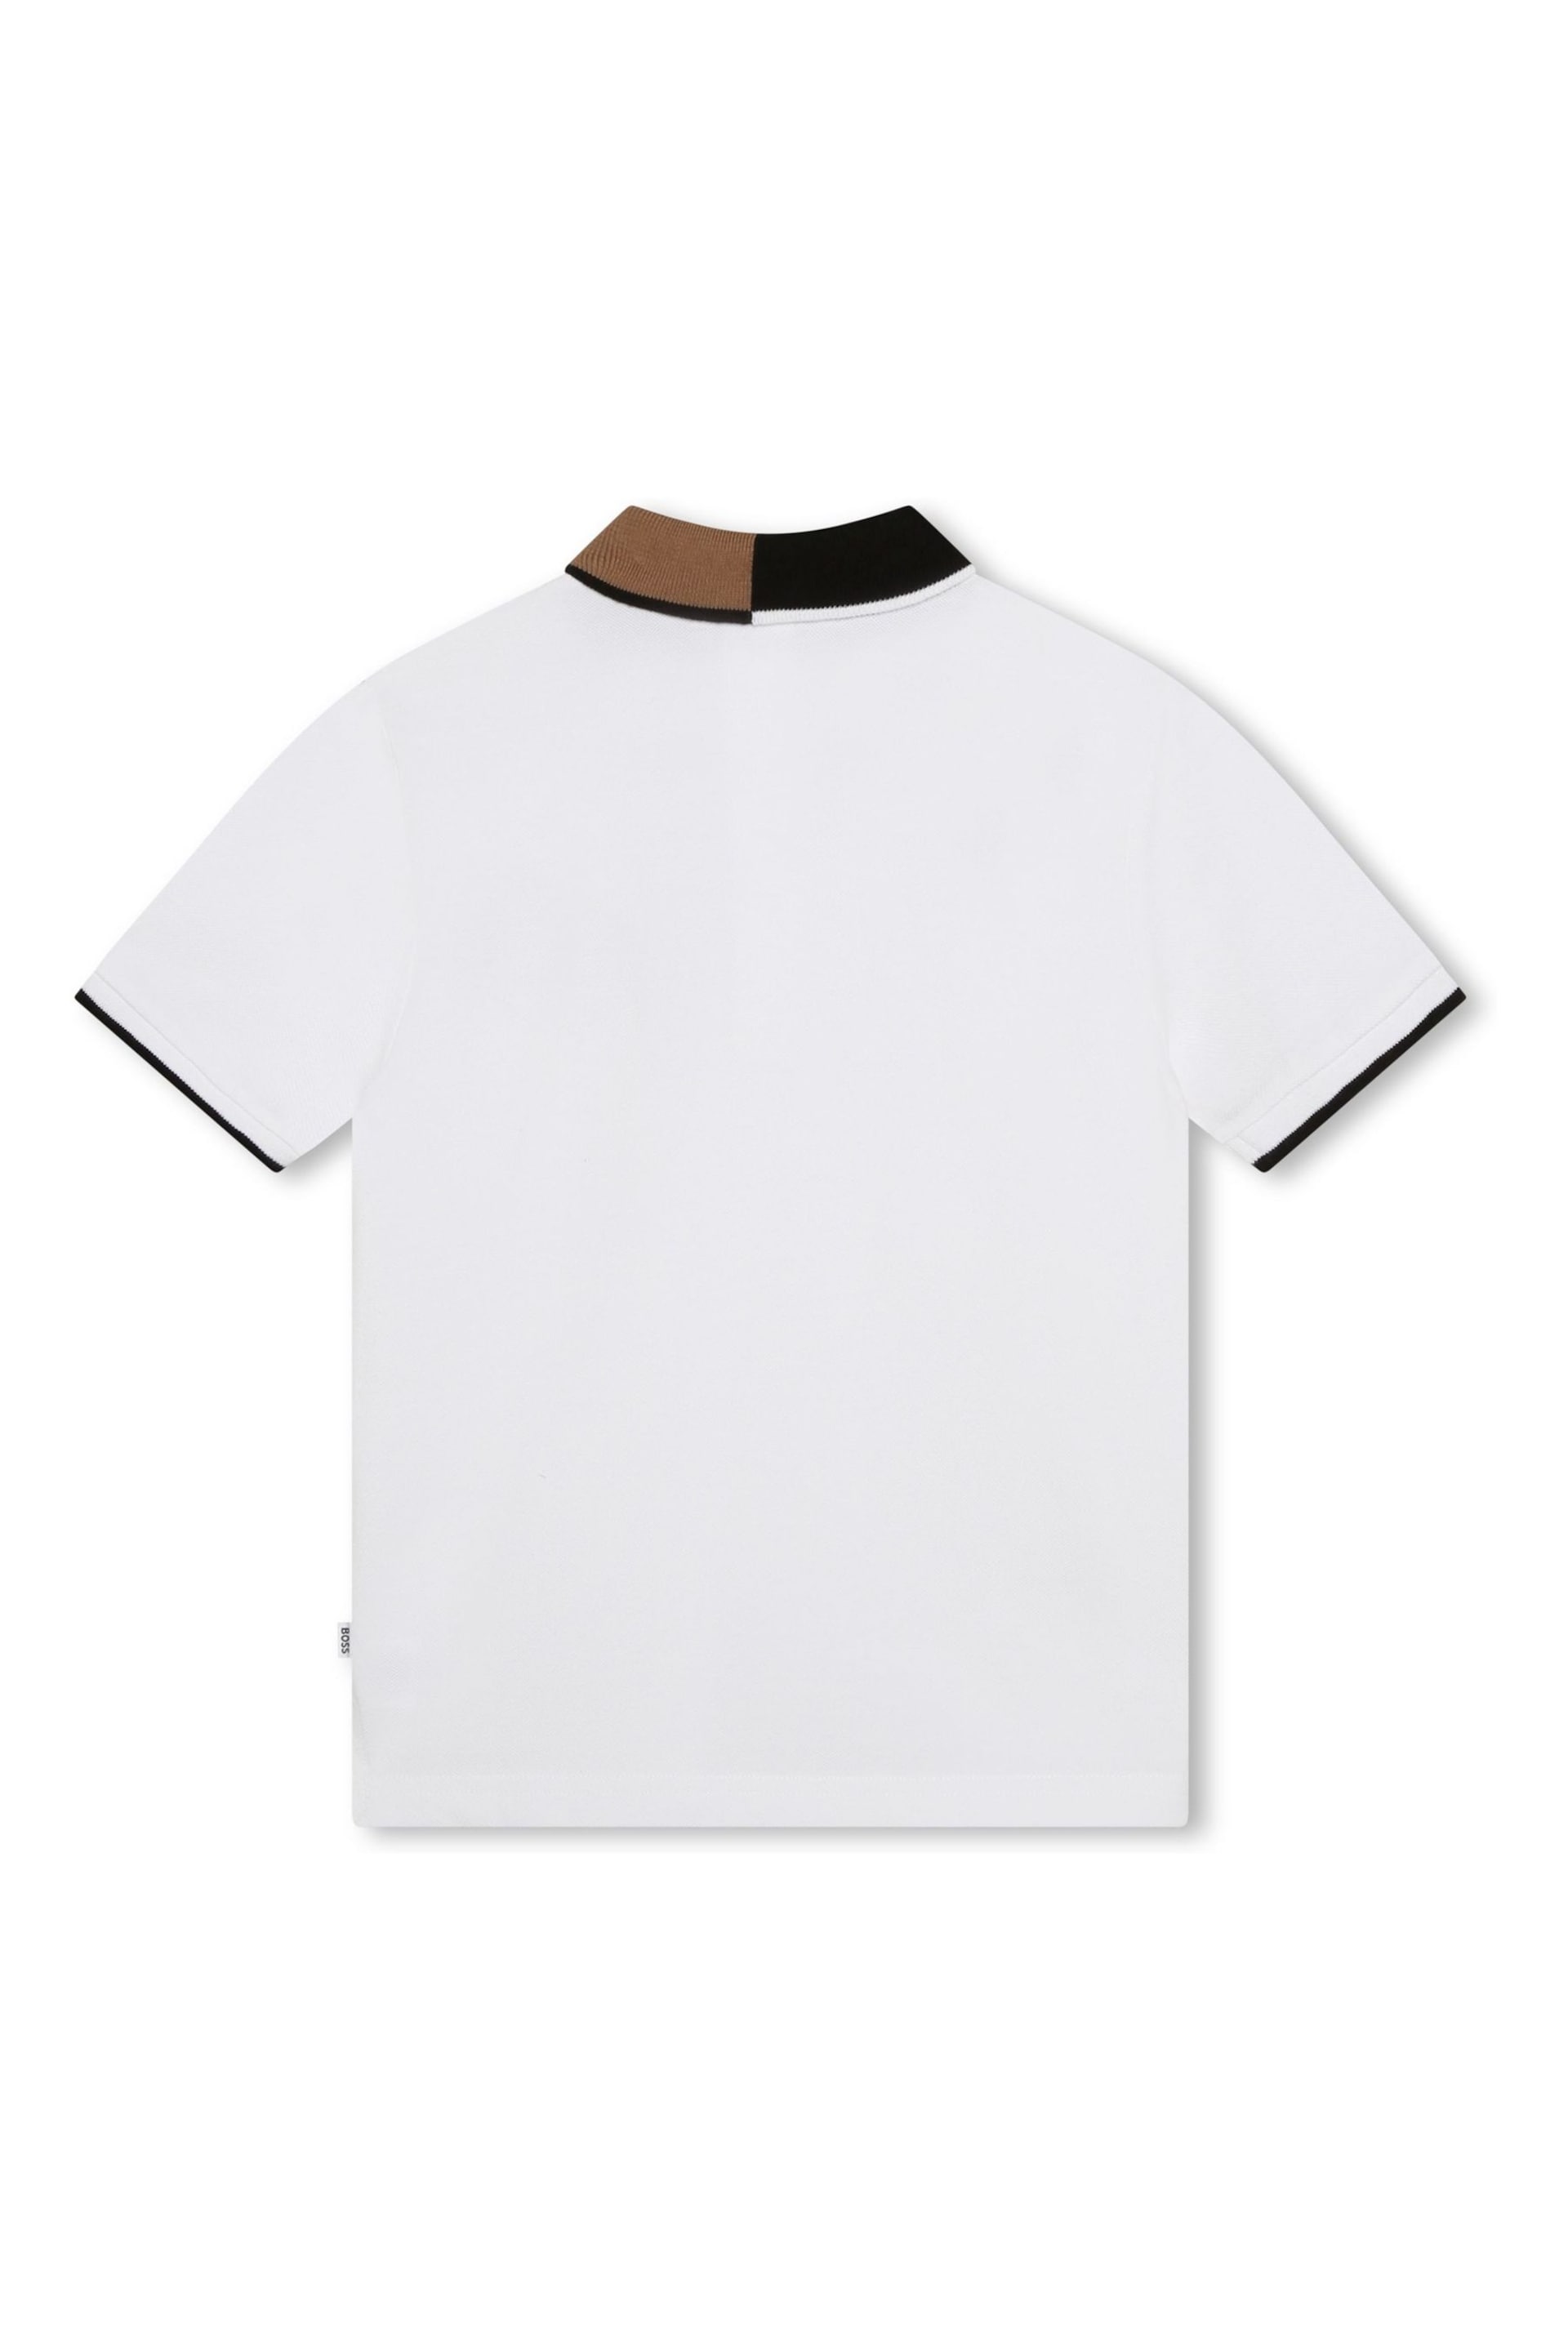 BOSS White Collar Polo Shirt - Image 2 of 3